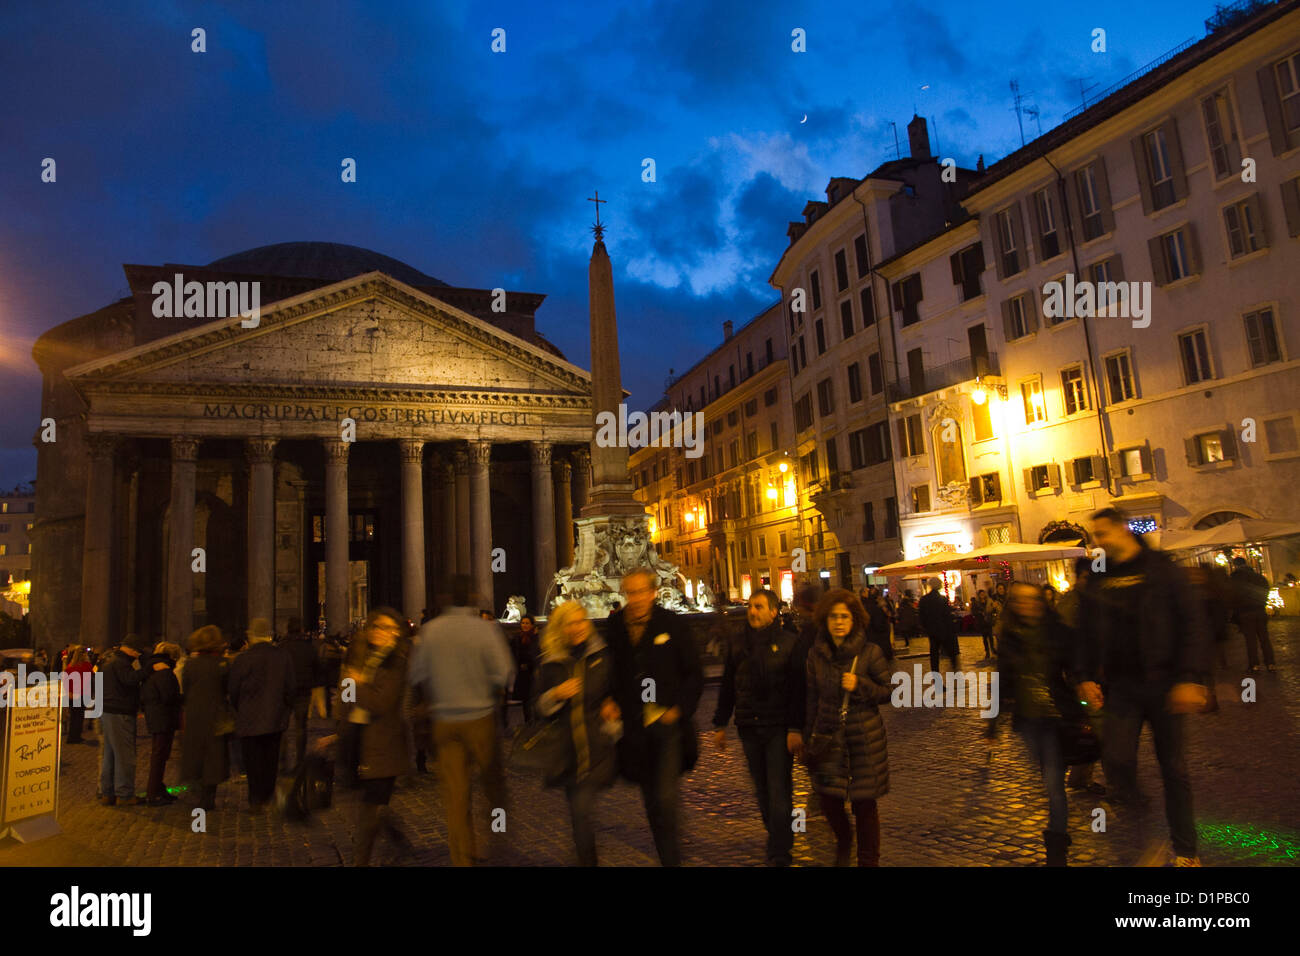 Pantheon square Rome Italy people walking at night  lights Stock Photo